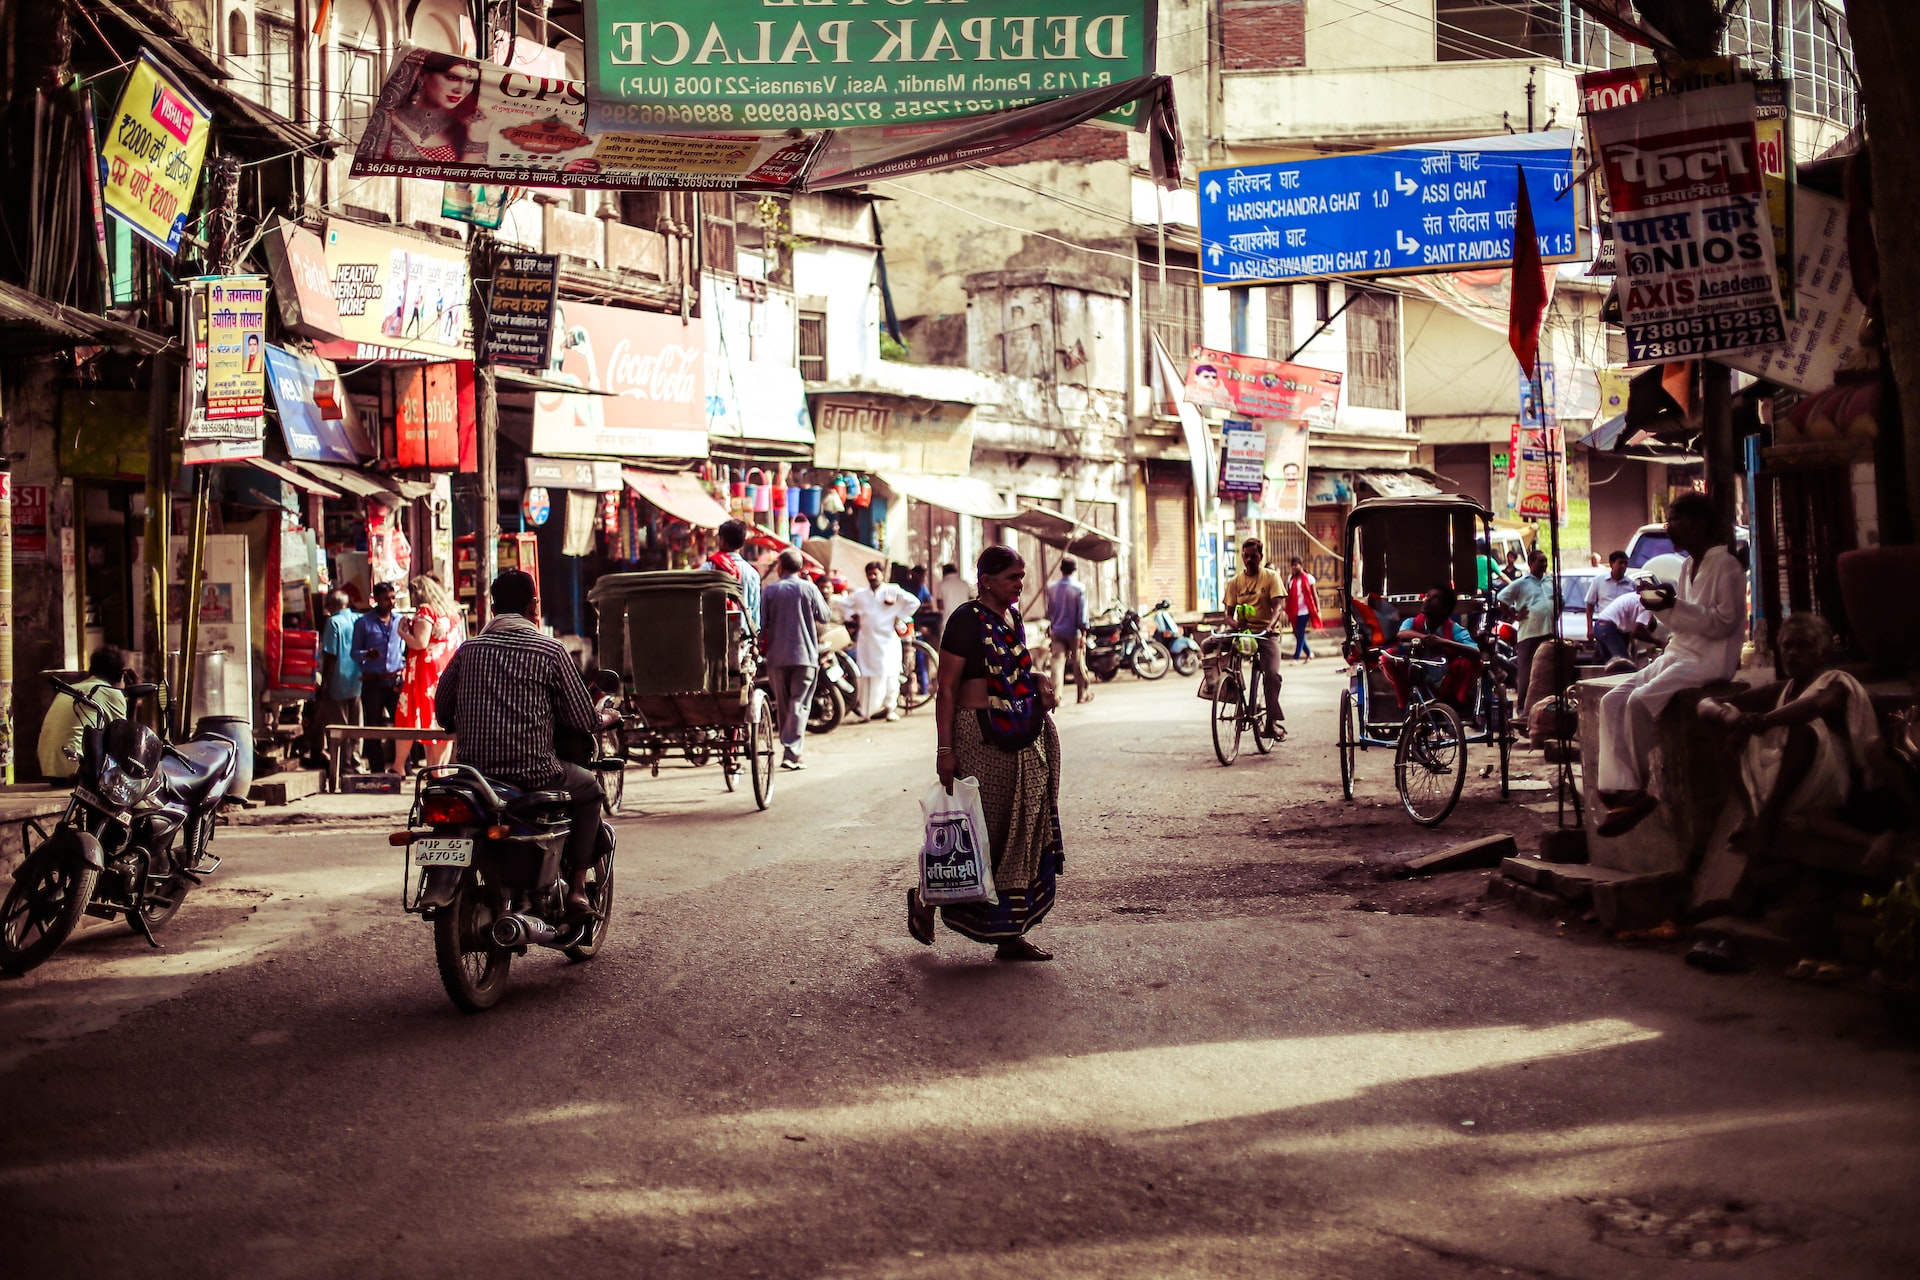 street in India